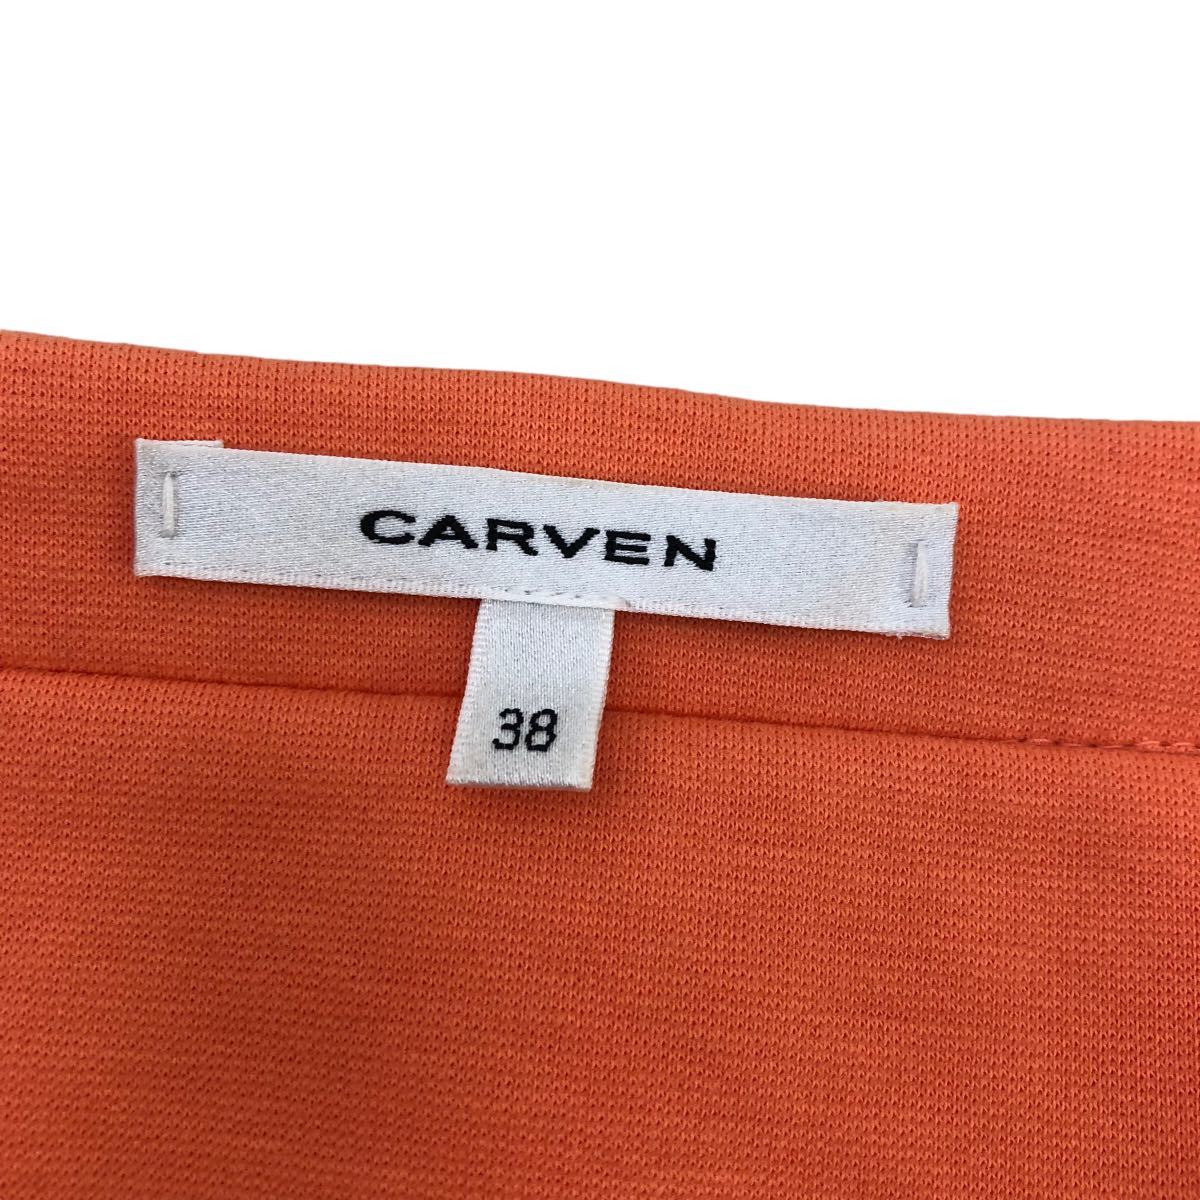 S167 CARVEN カルヴェン セットアップ ジャケット スカート 上着 羽織り ミニスカート 上下セット デザイン レディース 38 オレンジ_画像5